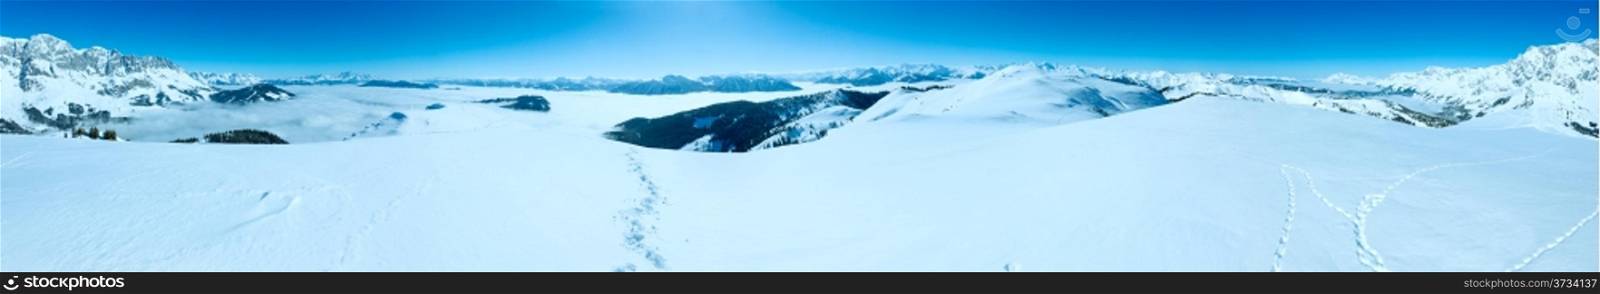 Morning winter mountain panorama with clouds in below valley (Hochkoenig region, Austria)